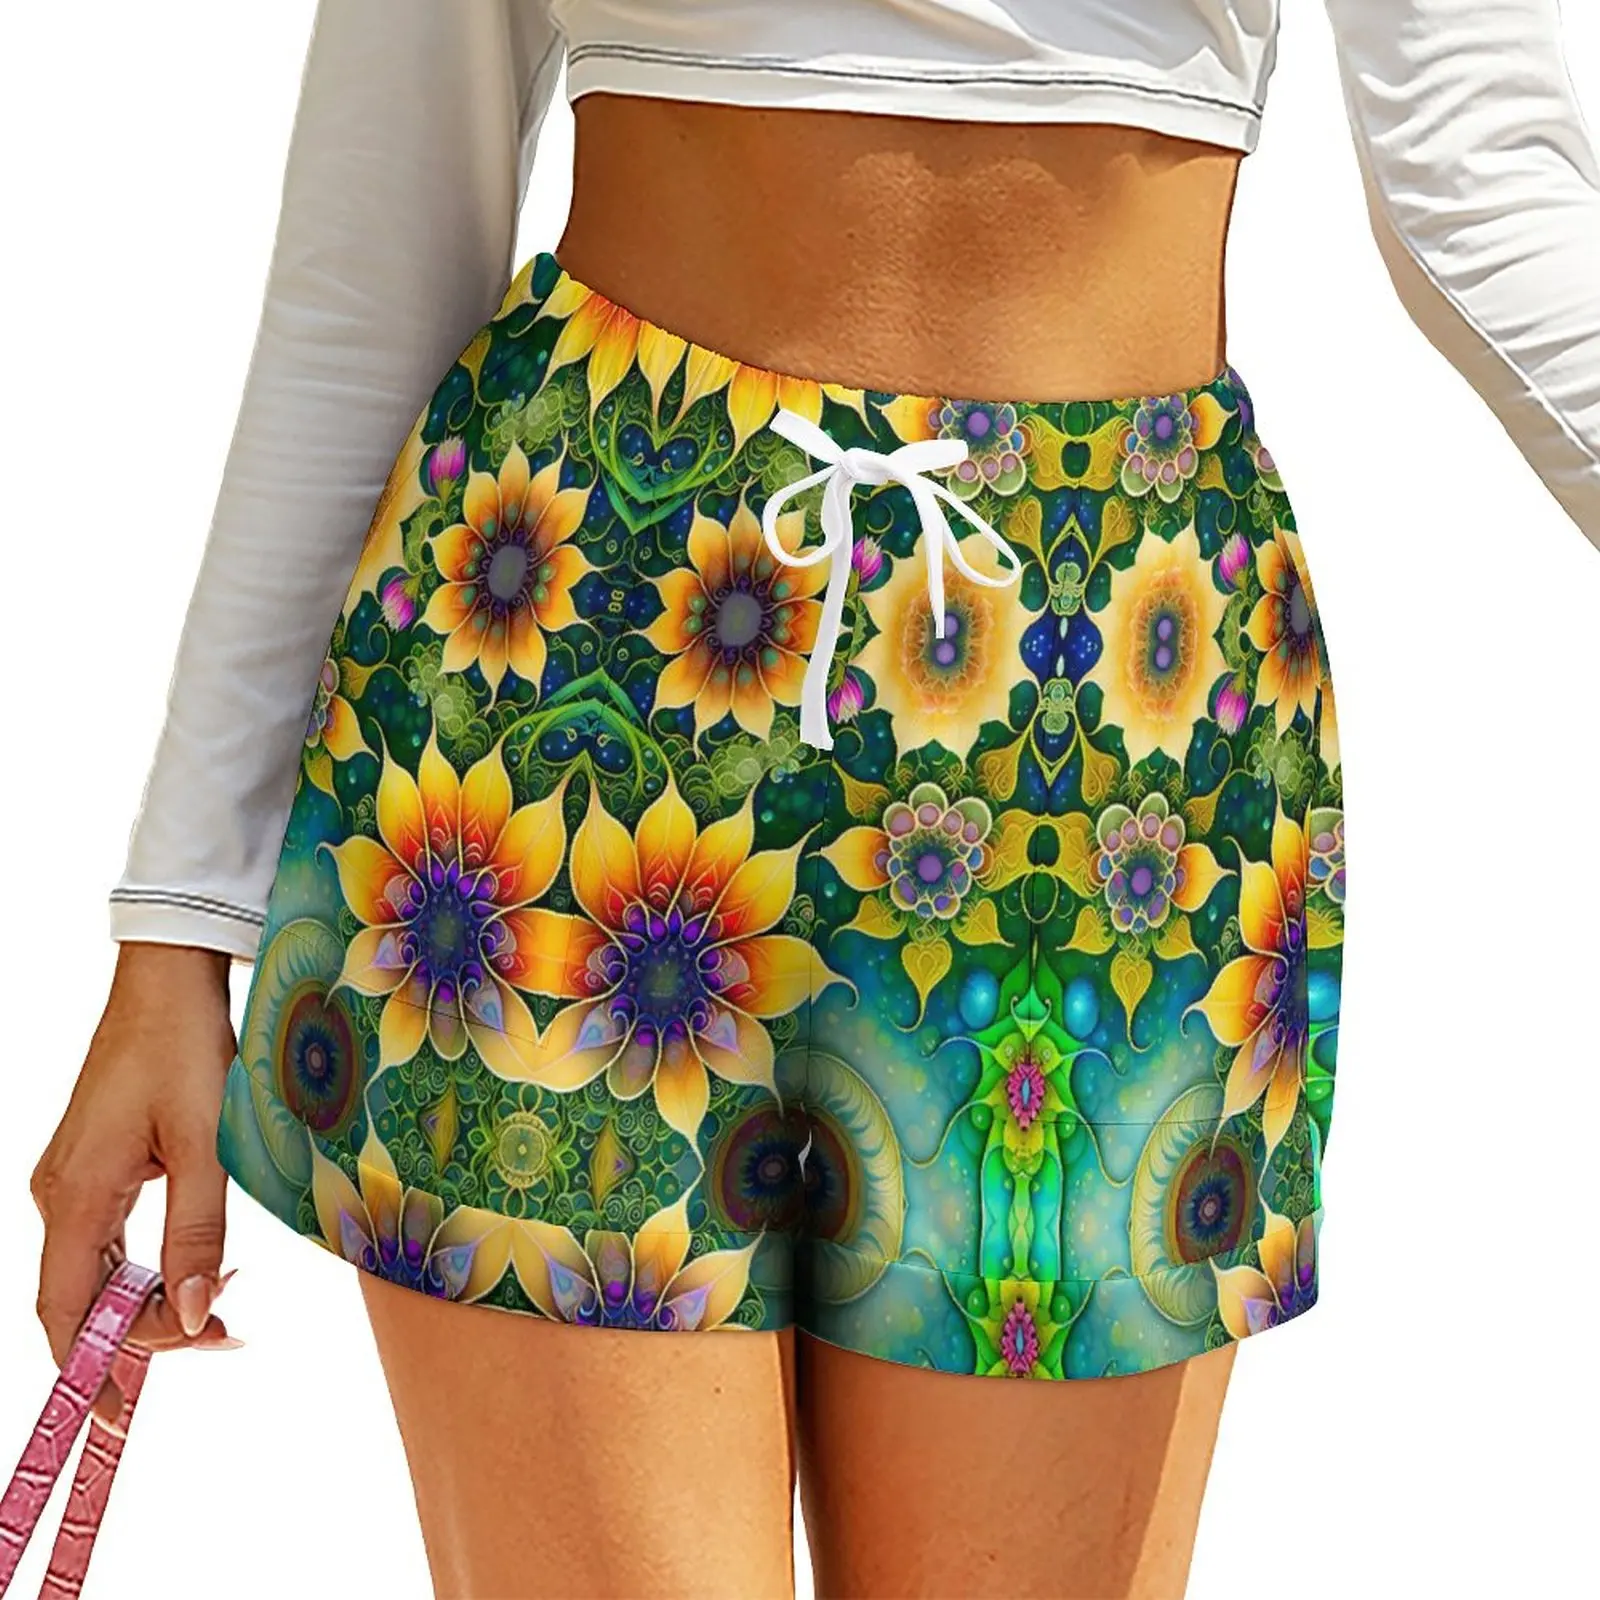 

Sunflower Shorts Female Floral Print Casual Design Shorts Elastic Waist Oversize Short Pants Cute Bottoms